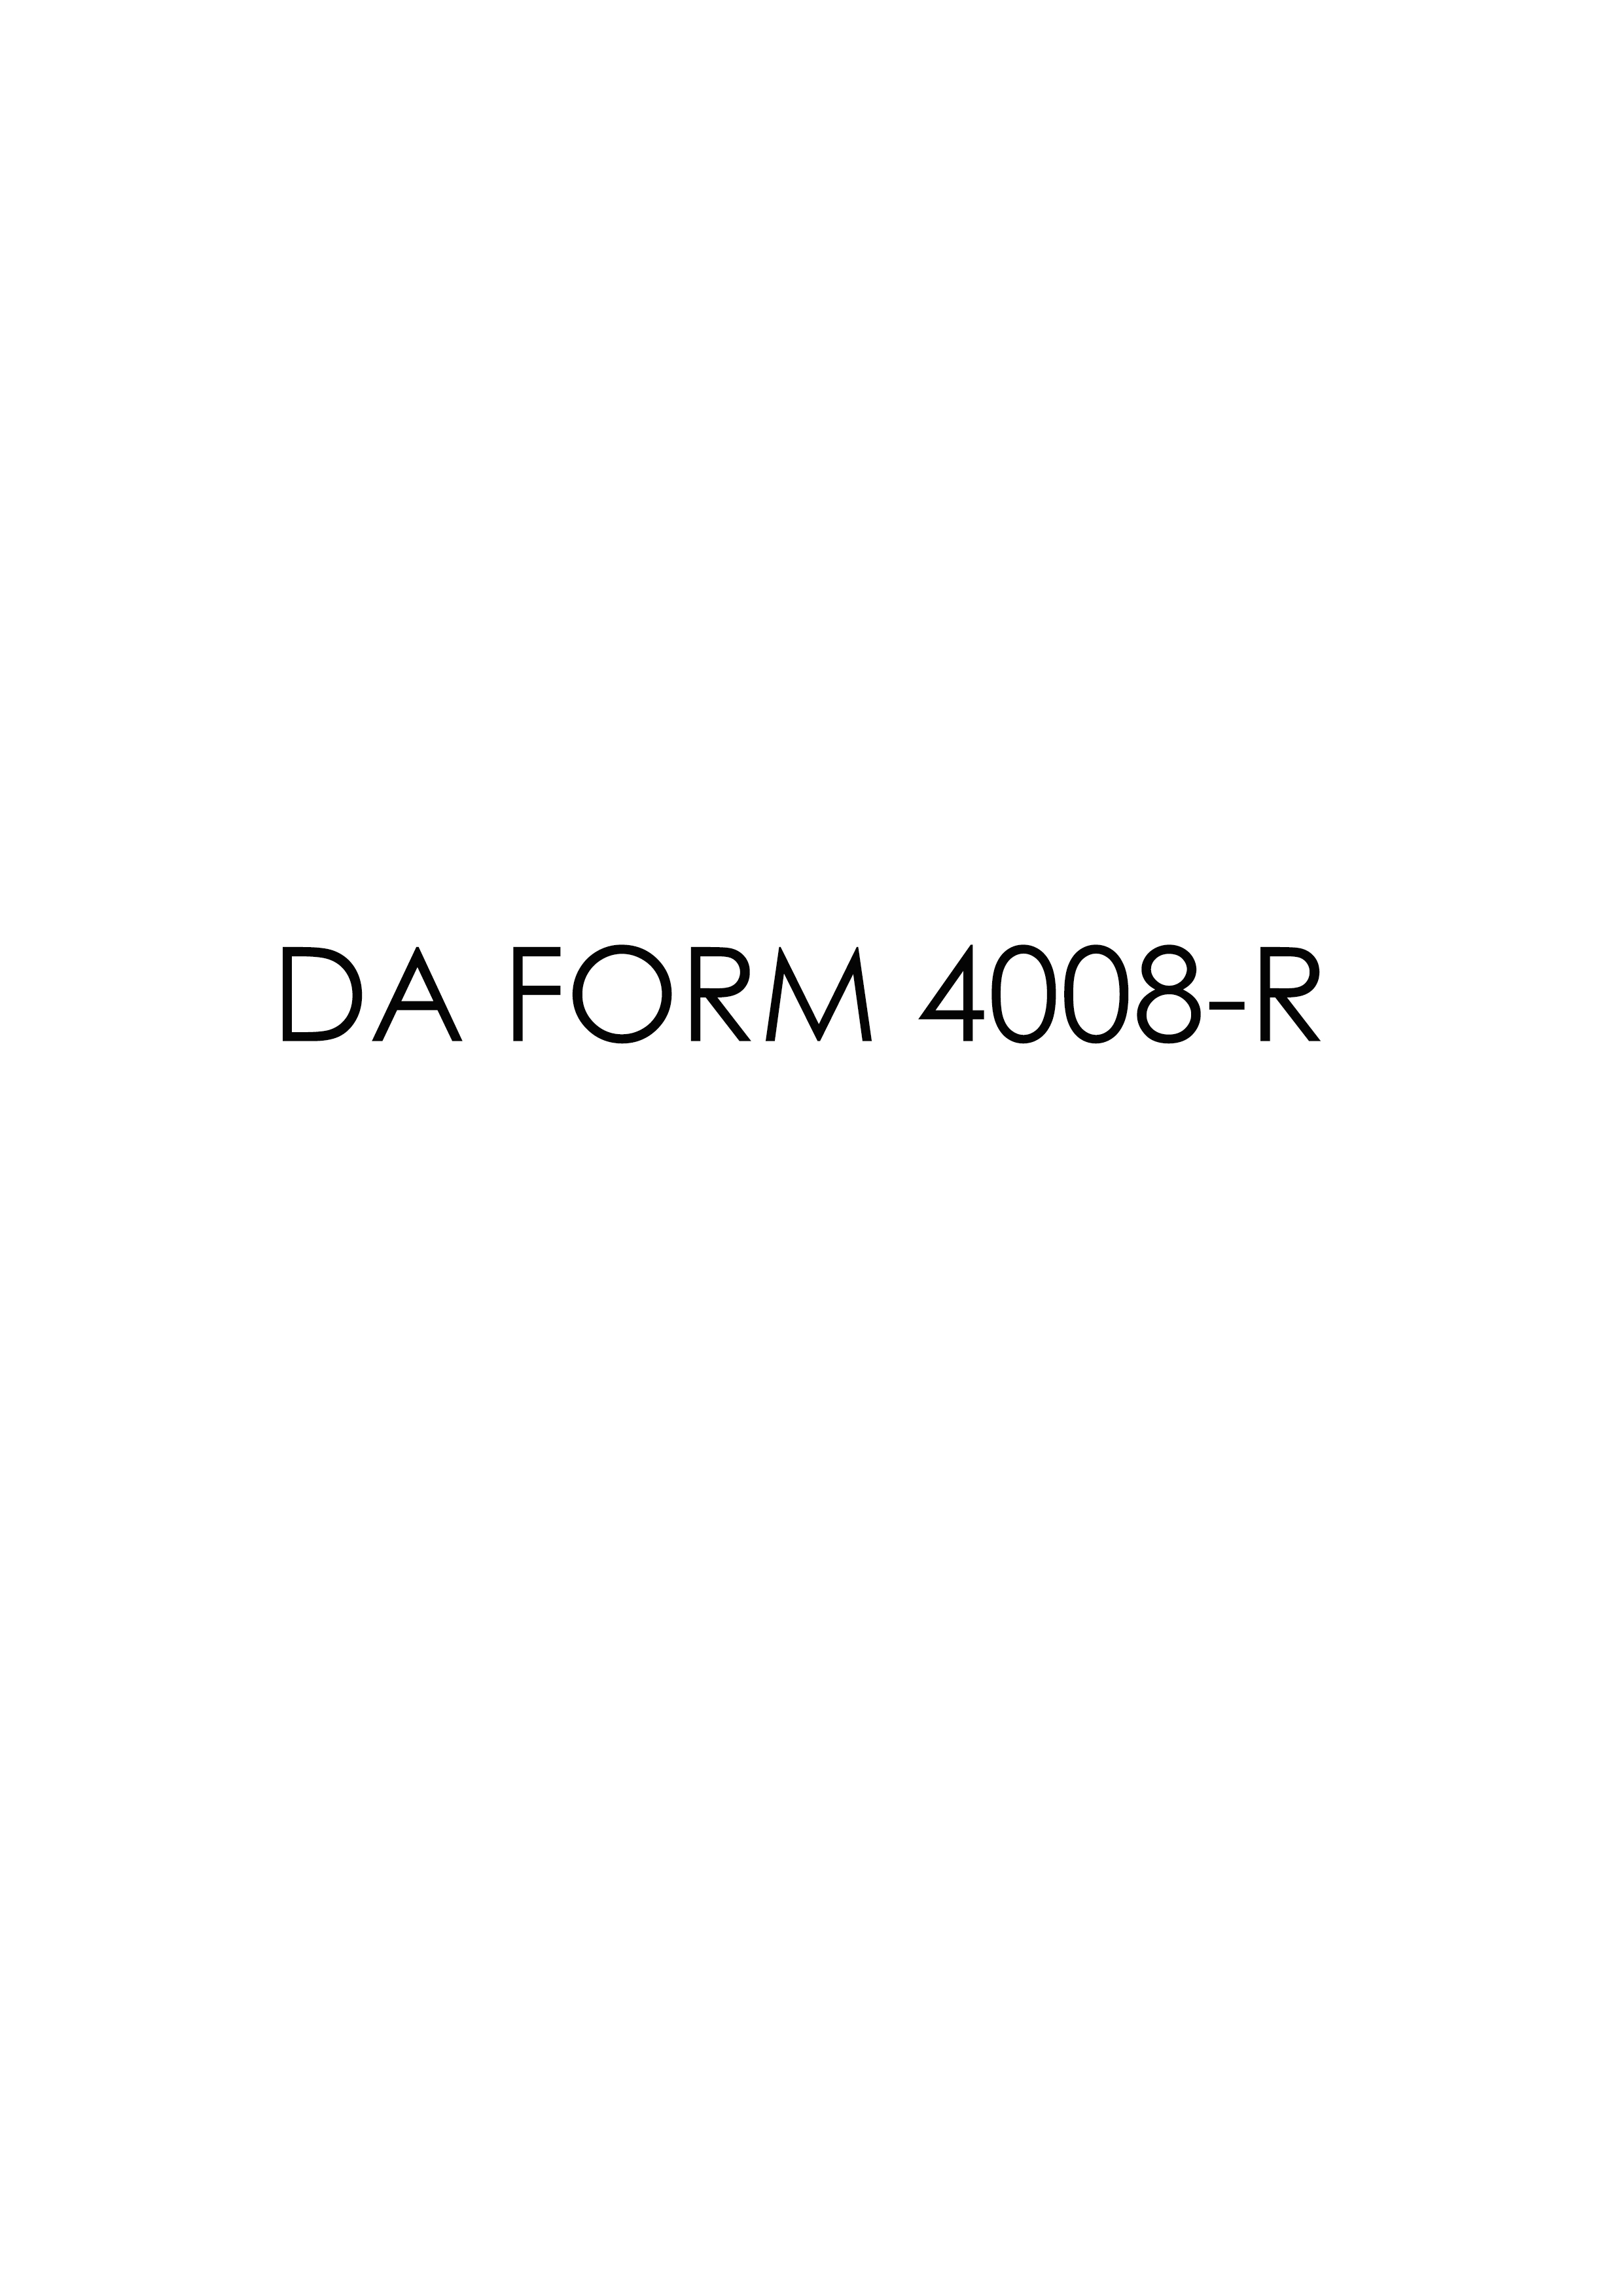 da Form 4008-R fillable